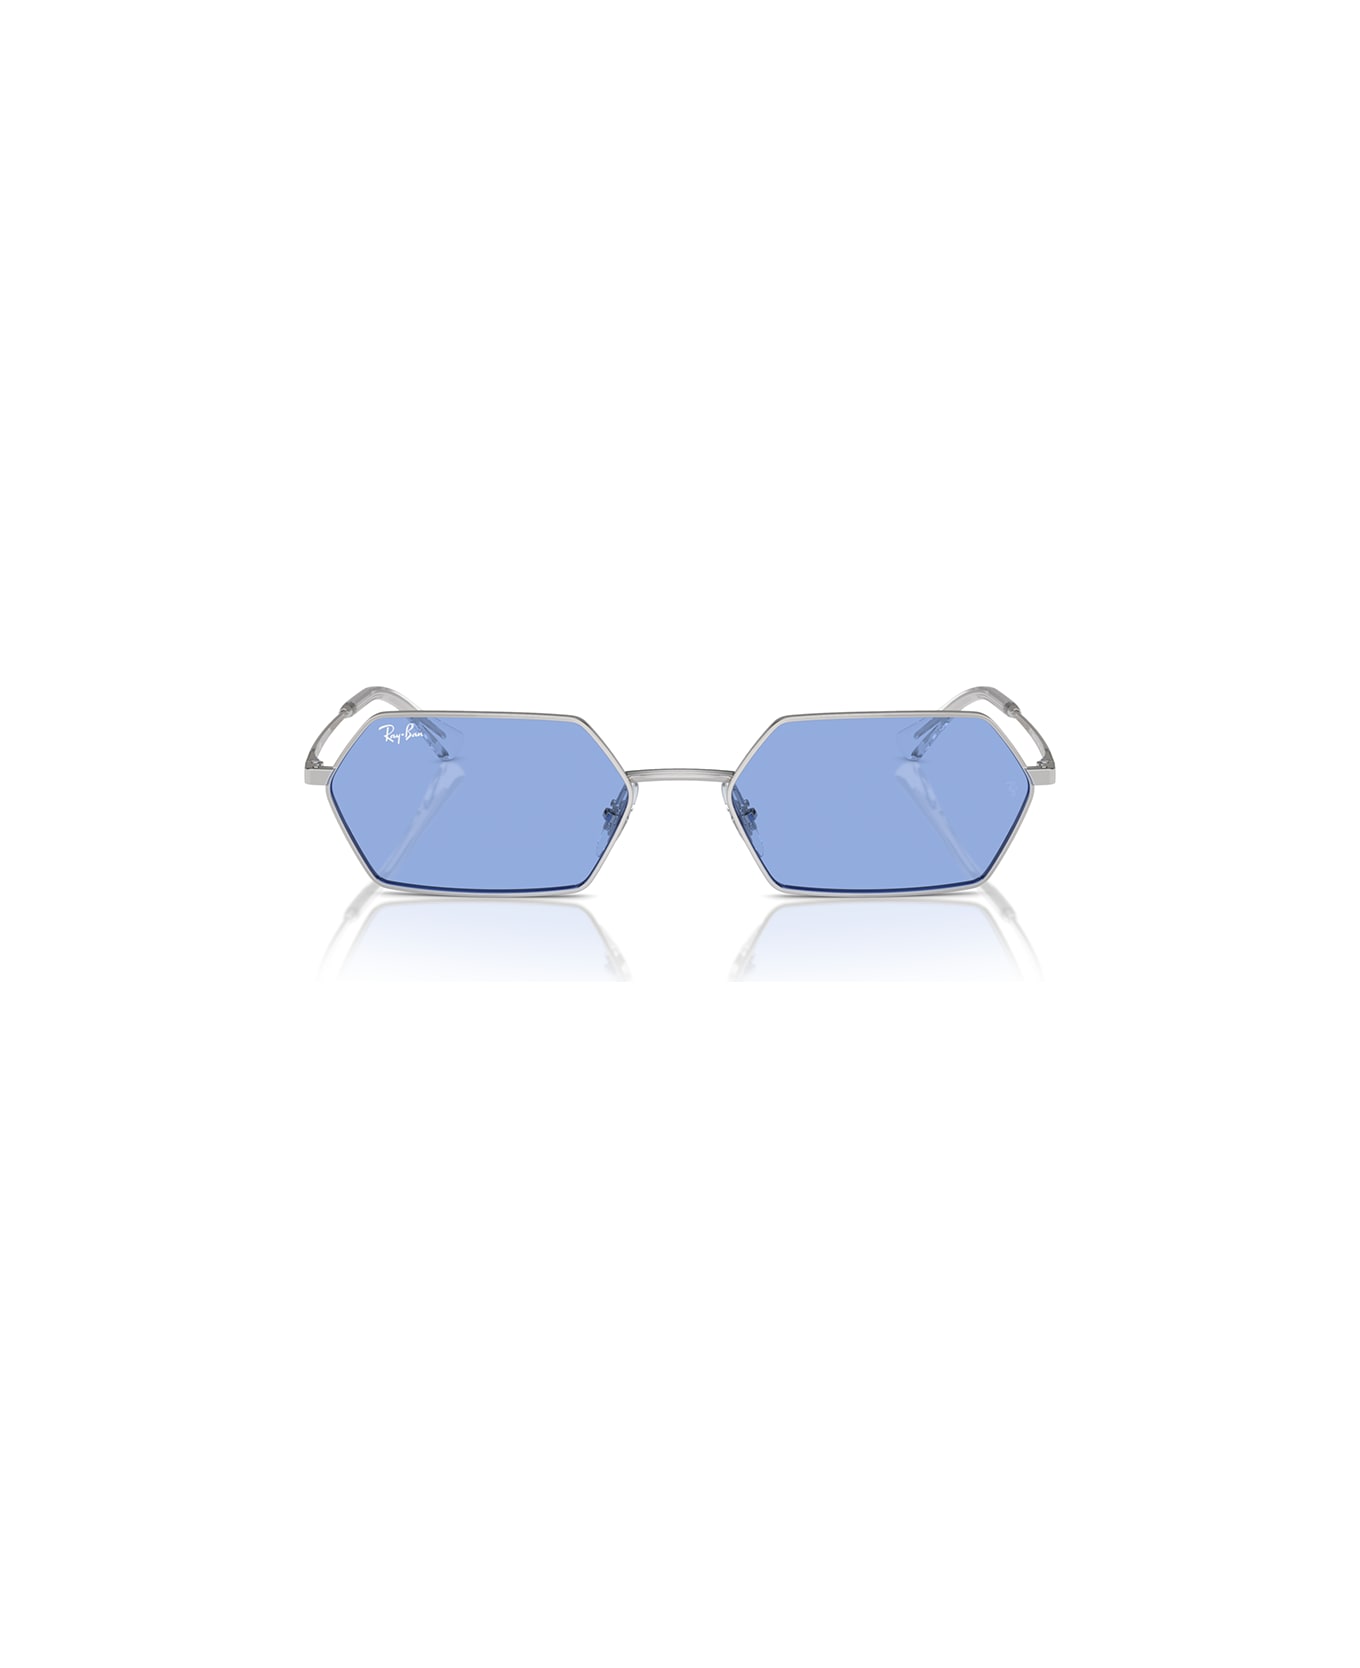 Ray-Ban Sunglasses - Silver/Blu